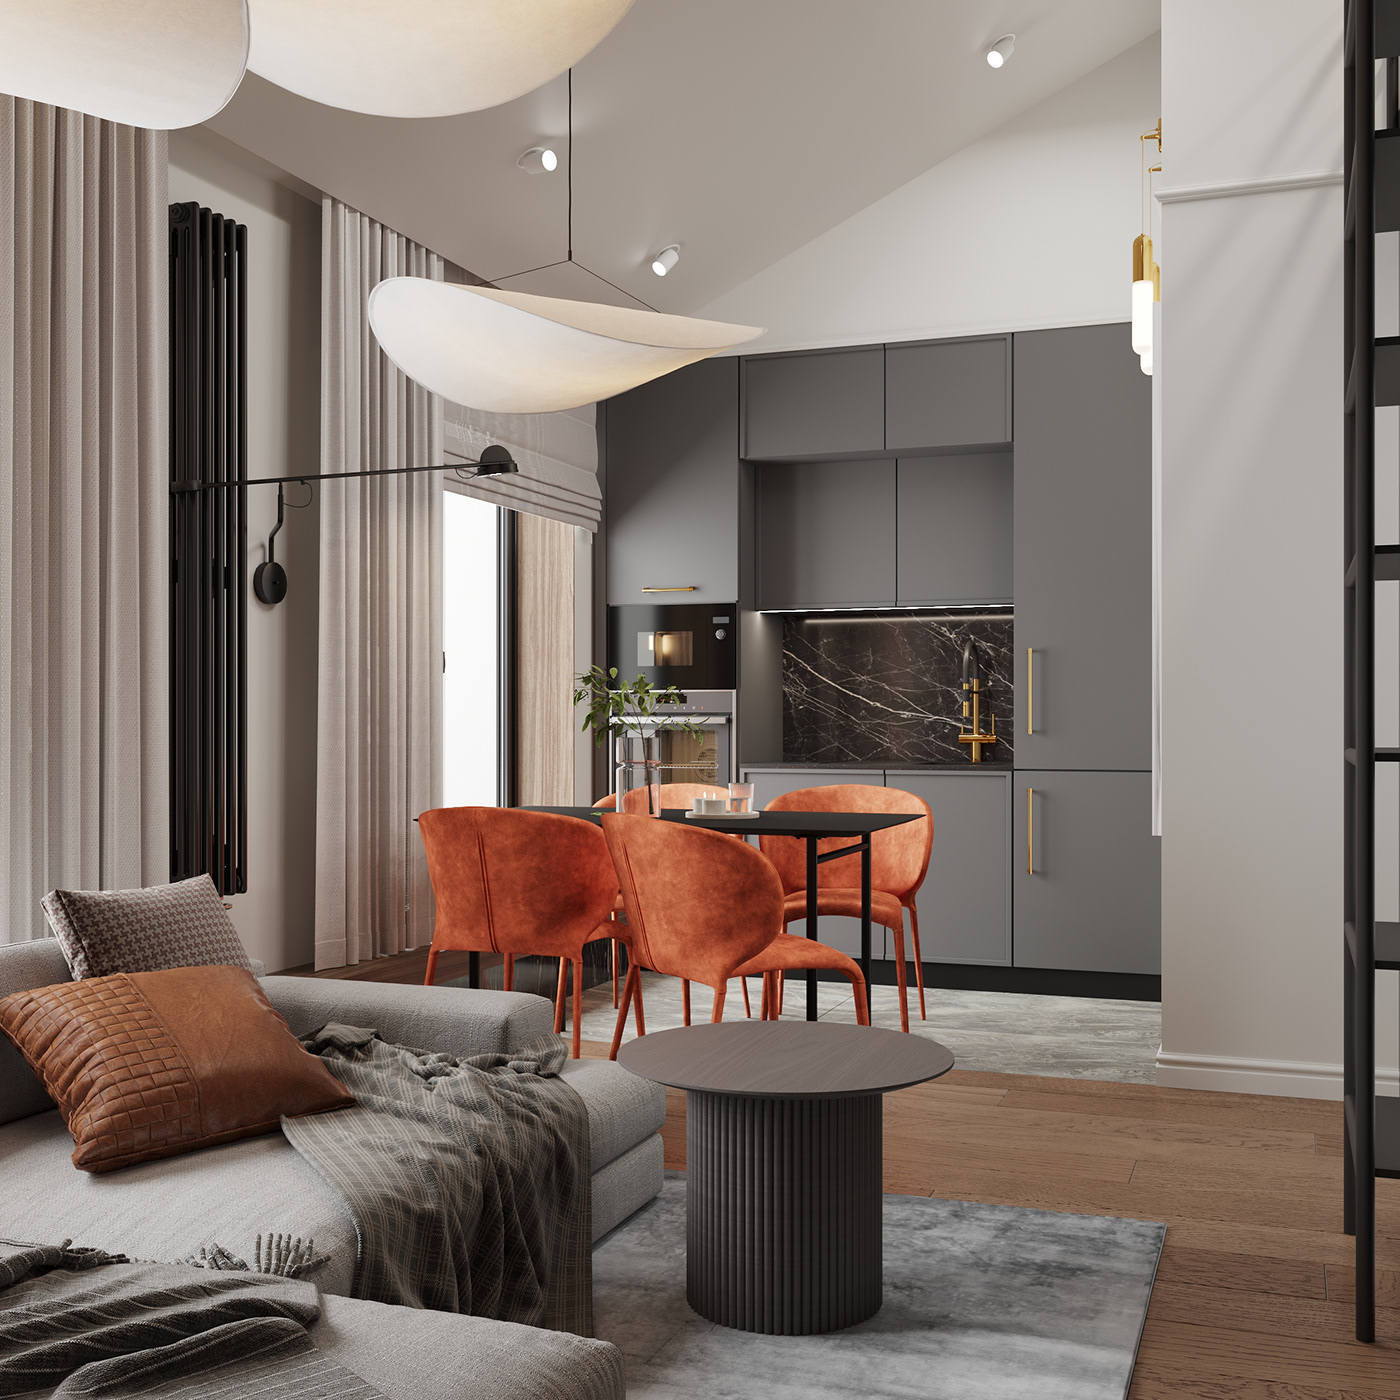 3ds max corona interior design  Render visualization апартаменты визуализация дизайн интерьера